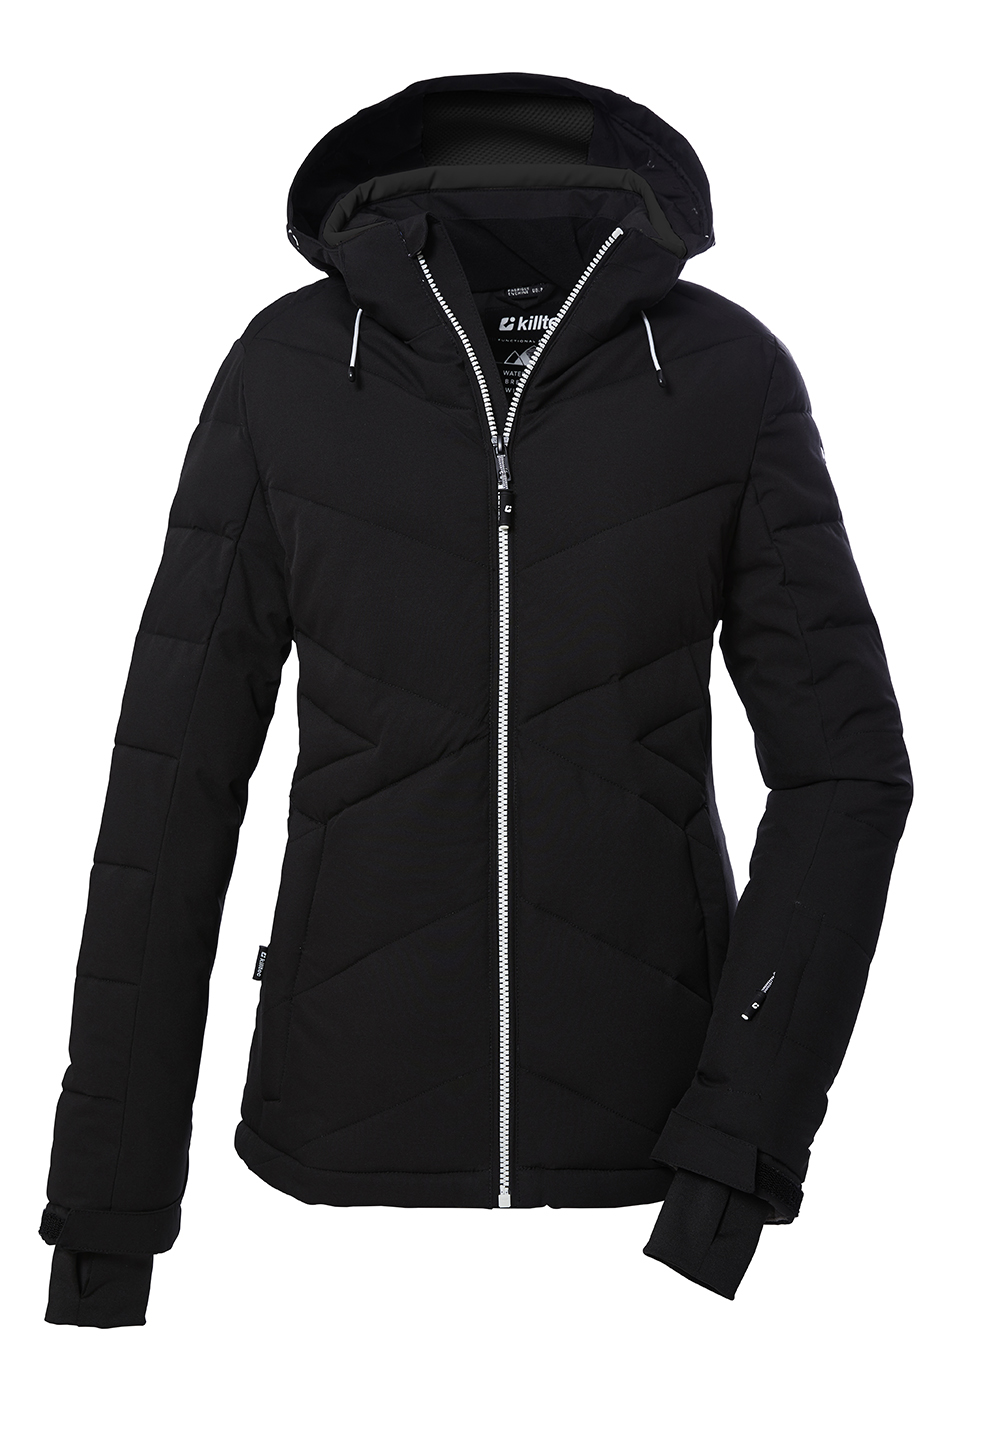 Killtec Damen KSW 90 Jacke in Daunenoptik mit abzippbarer Kapuze und Schneefang 39741 schwarz